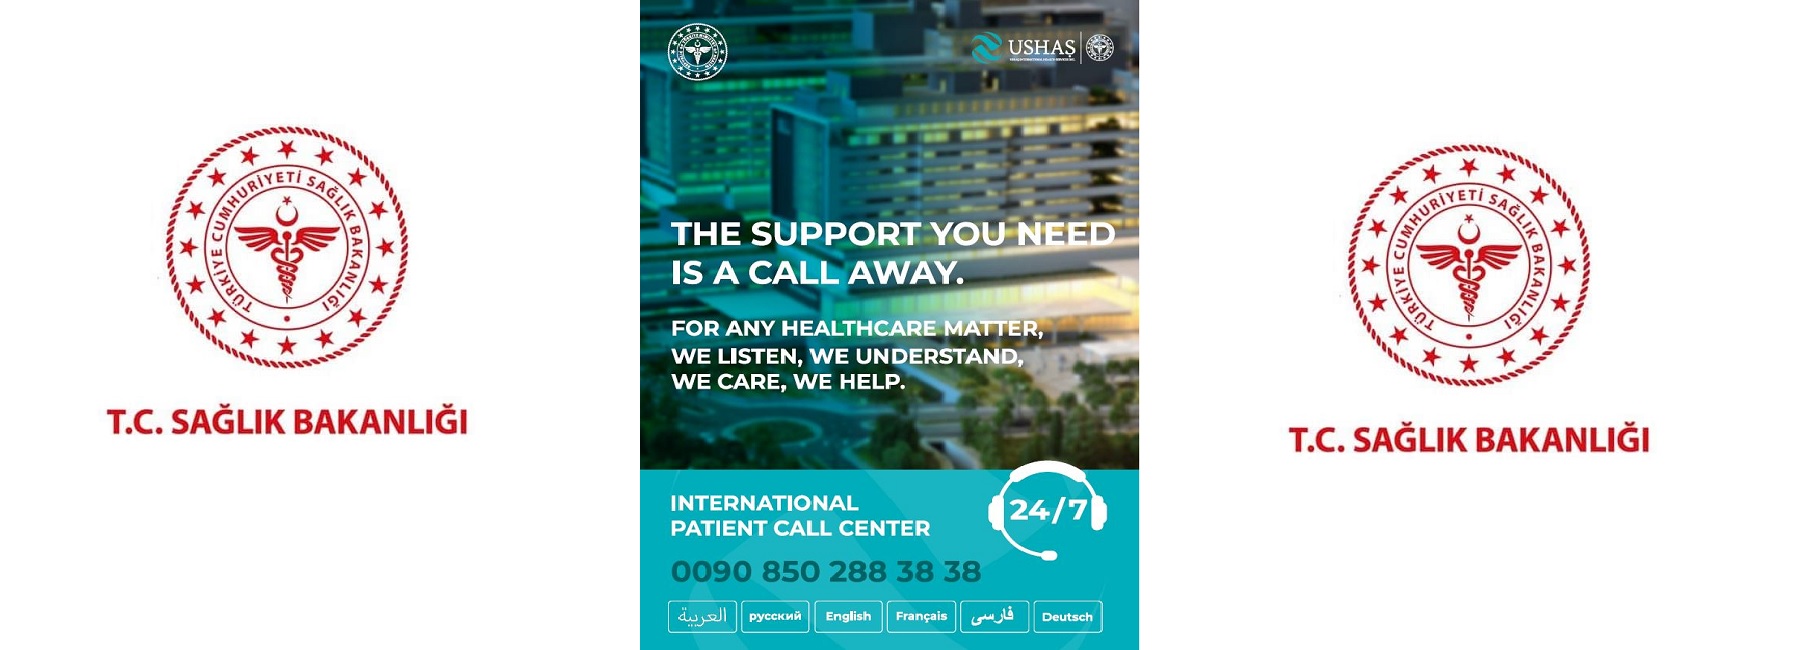 USHAŞ International Patient Call Center